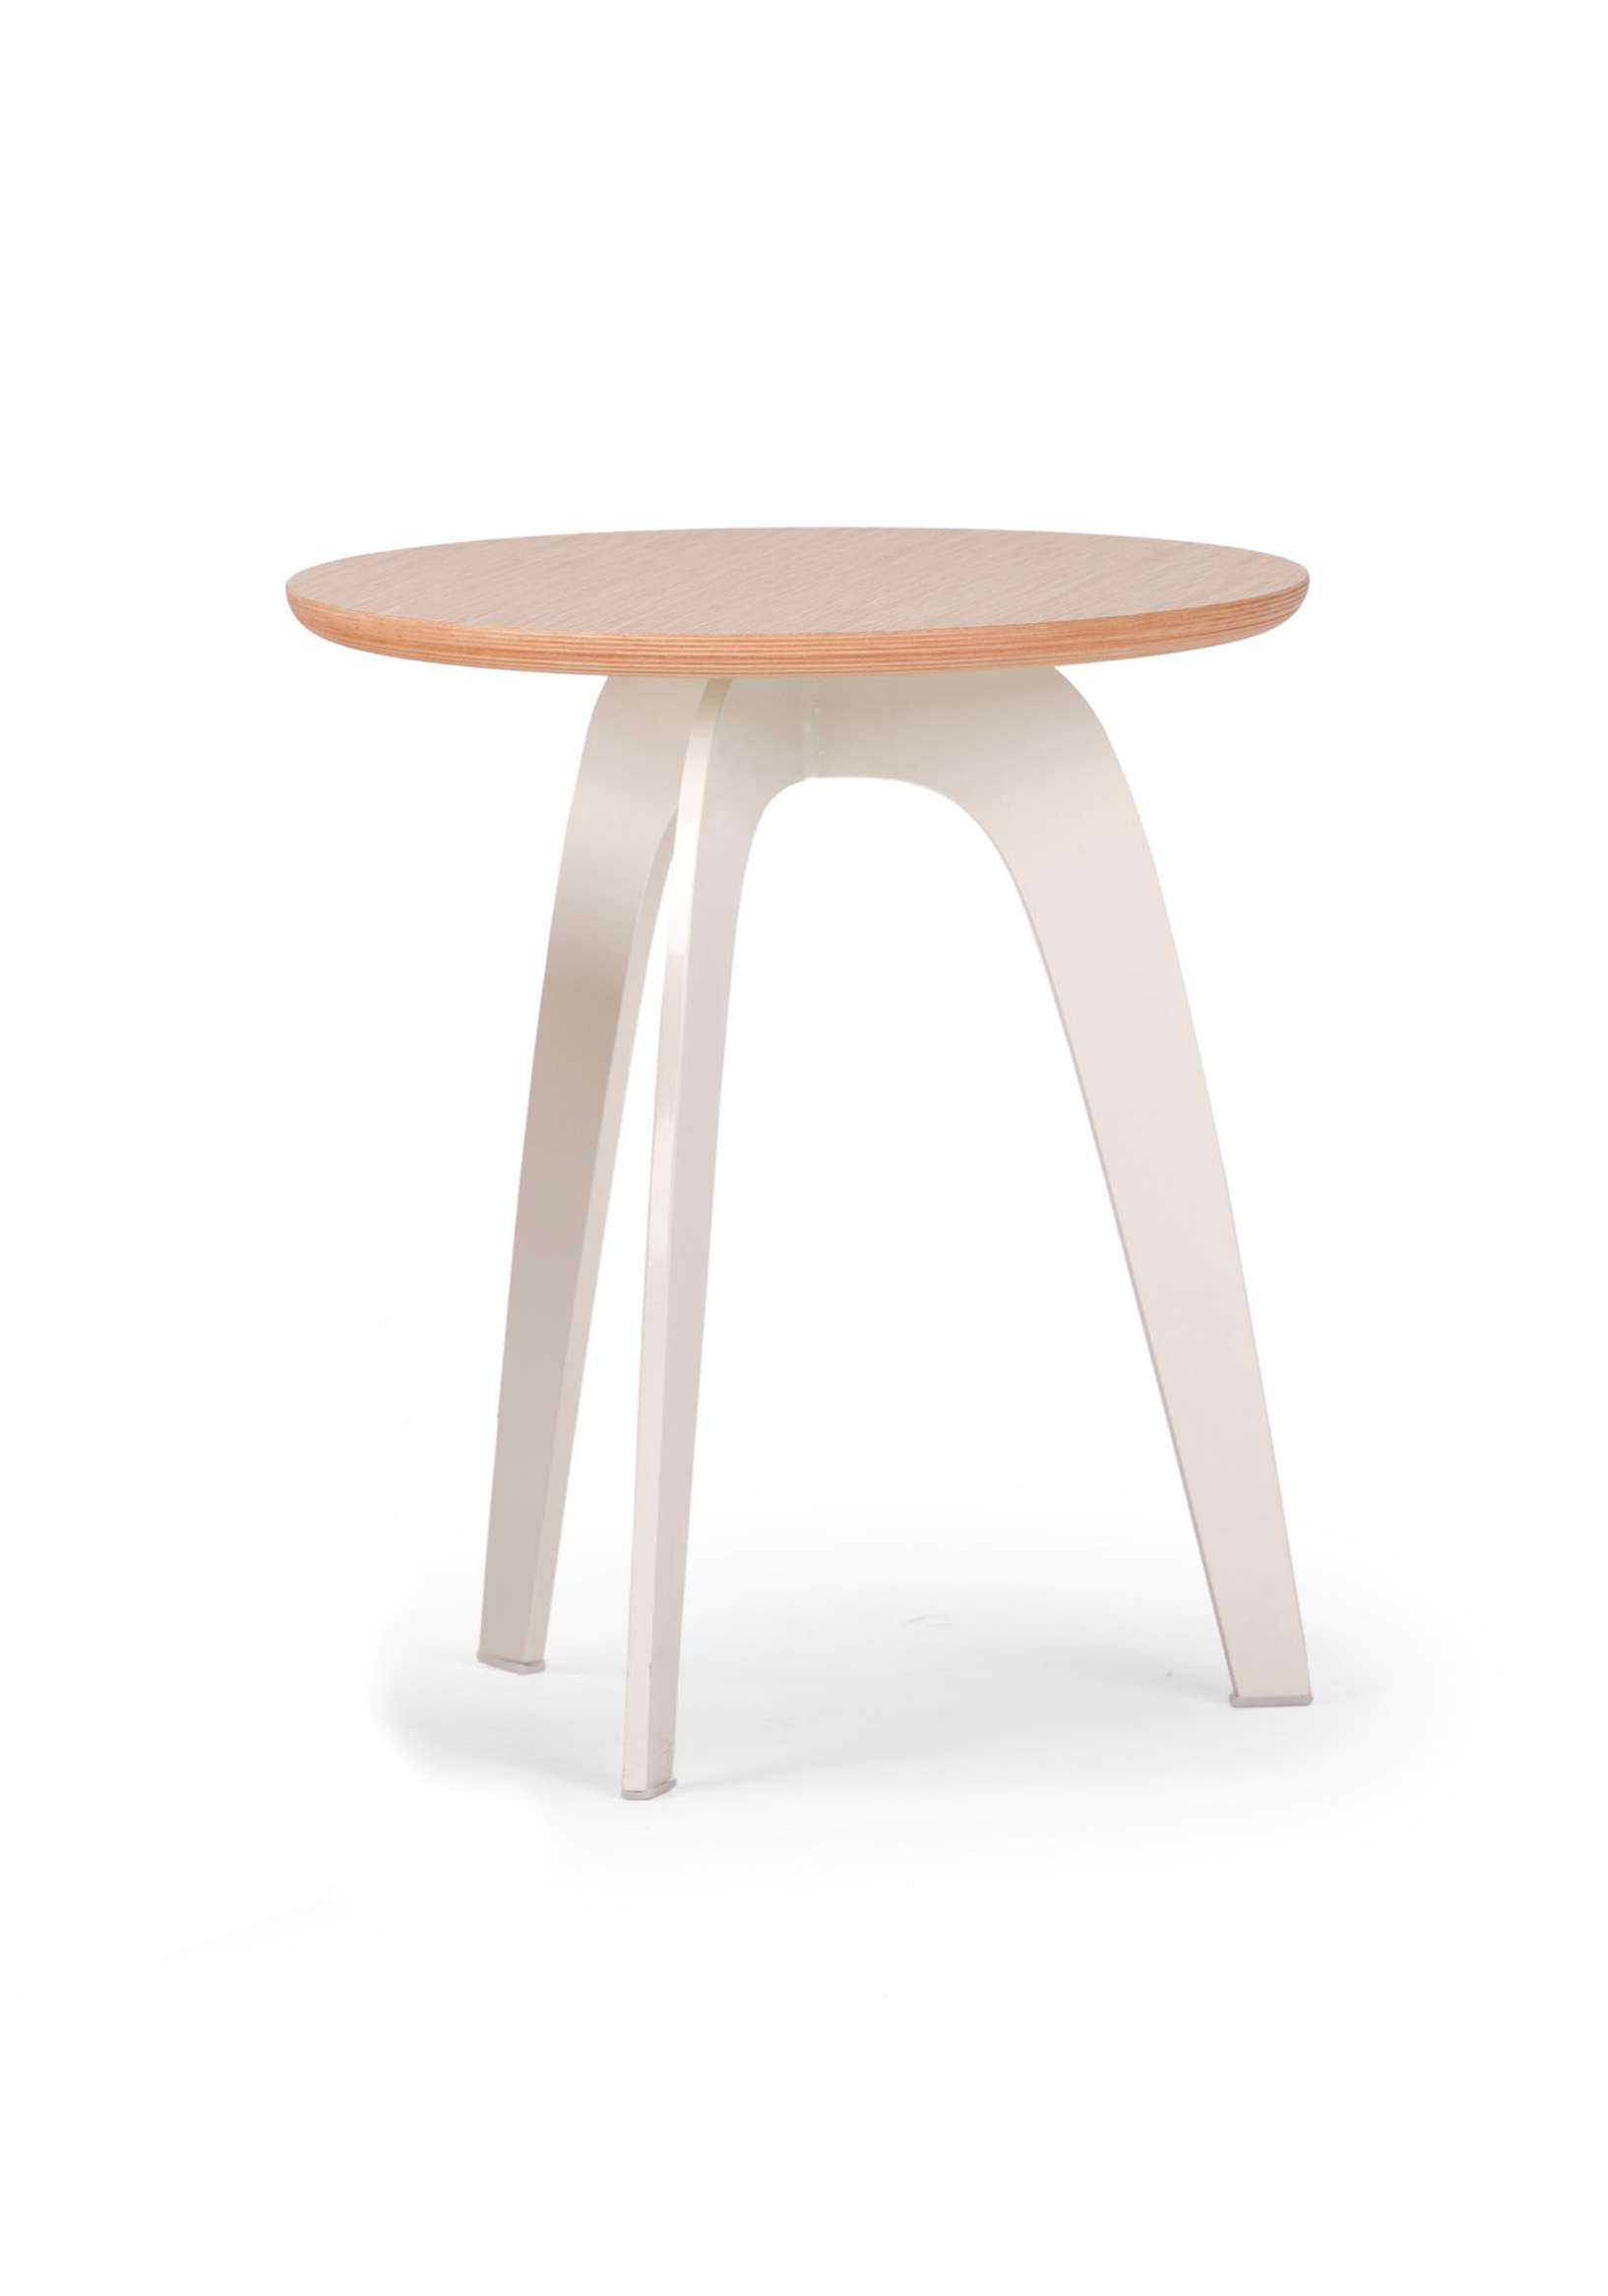 True Design Millepiedi table